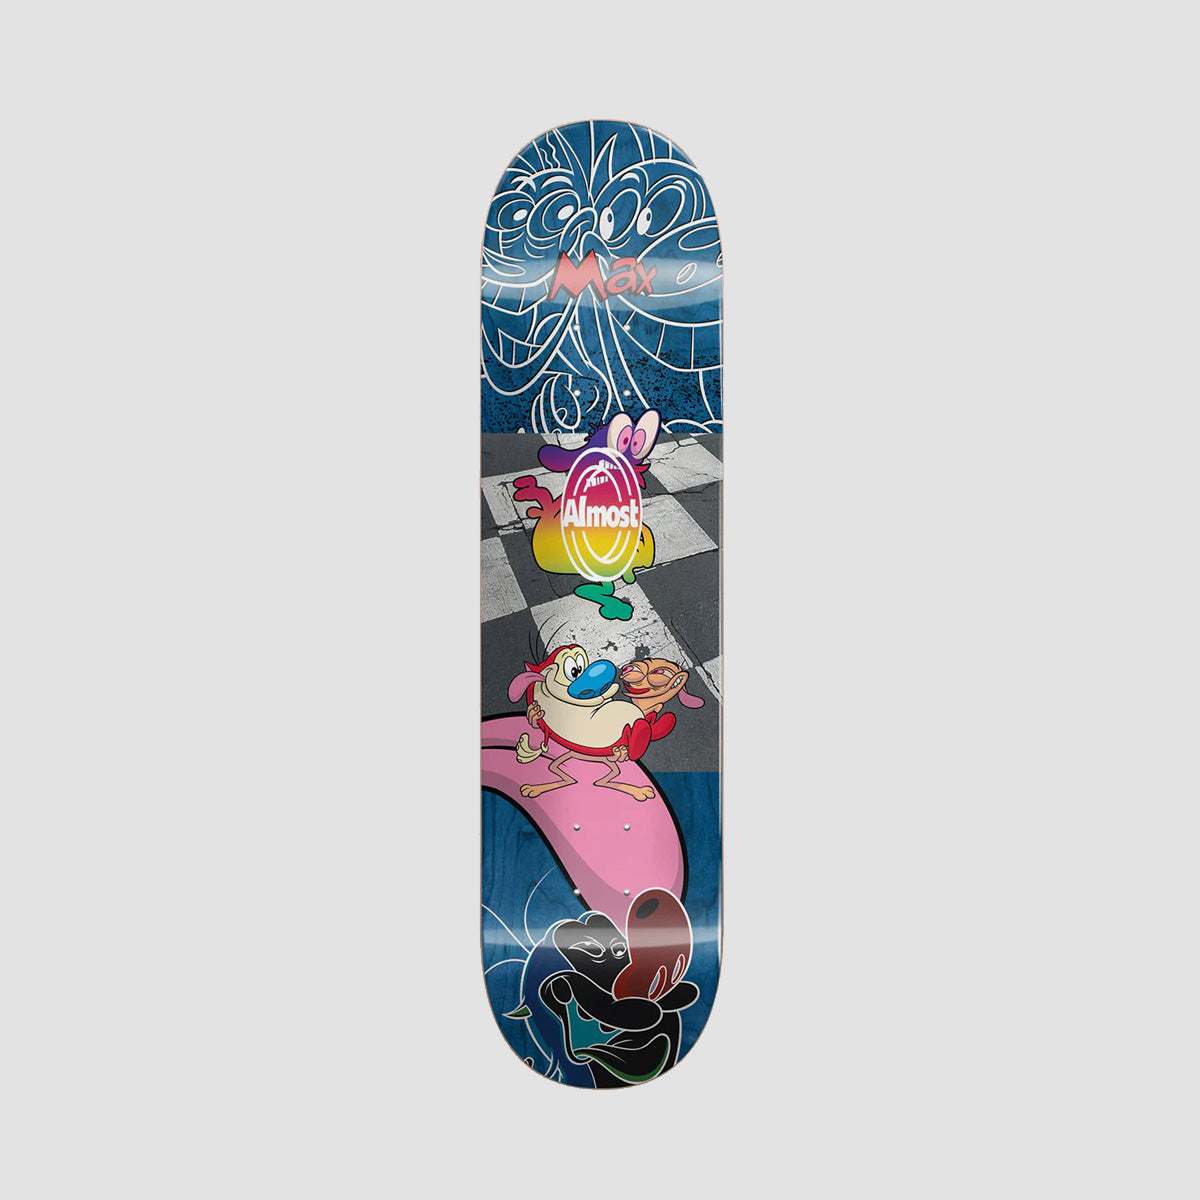 Almost Ren & Stimpy Mixed Up R7 Skateboard Deck Max Geronzi - 8.25"